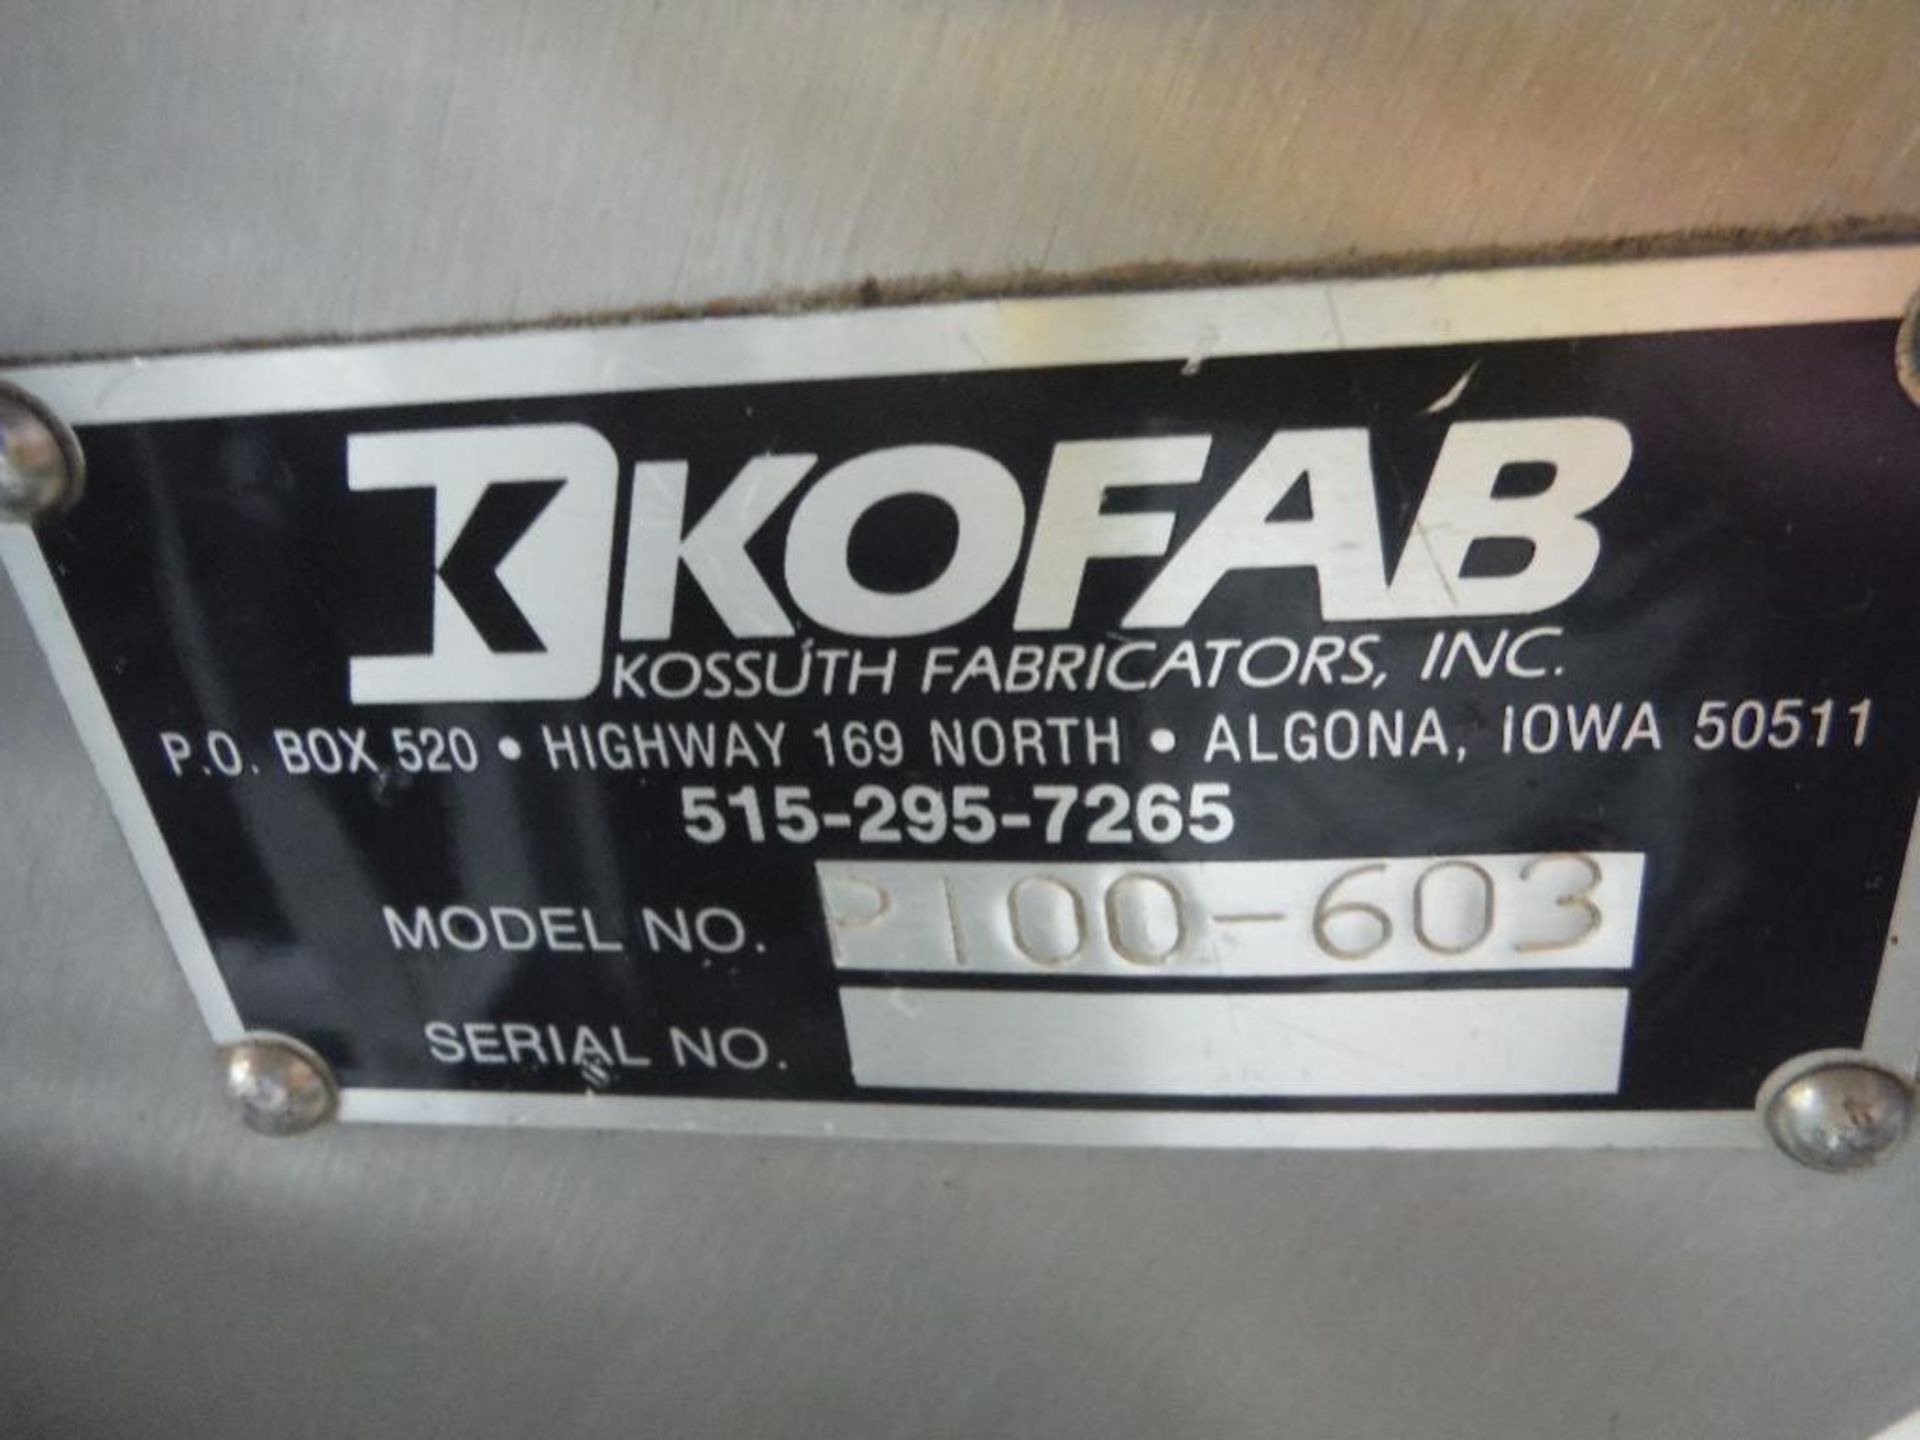 Kofab 180 degree conveyor, Model 2100-603, accumulation belt, 150 in. long straight, 180 degree turn - Image 3 of 7